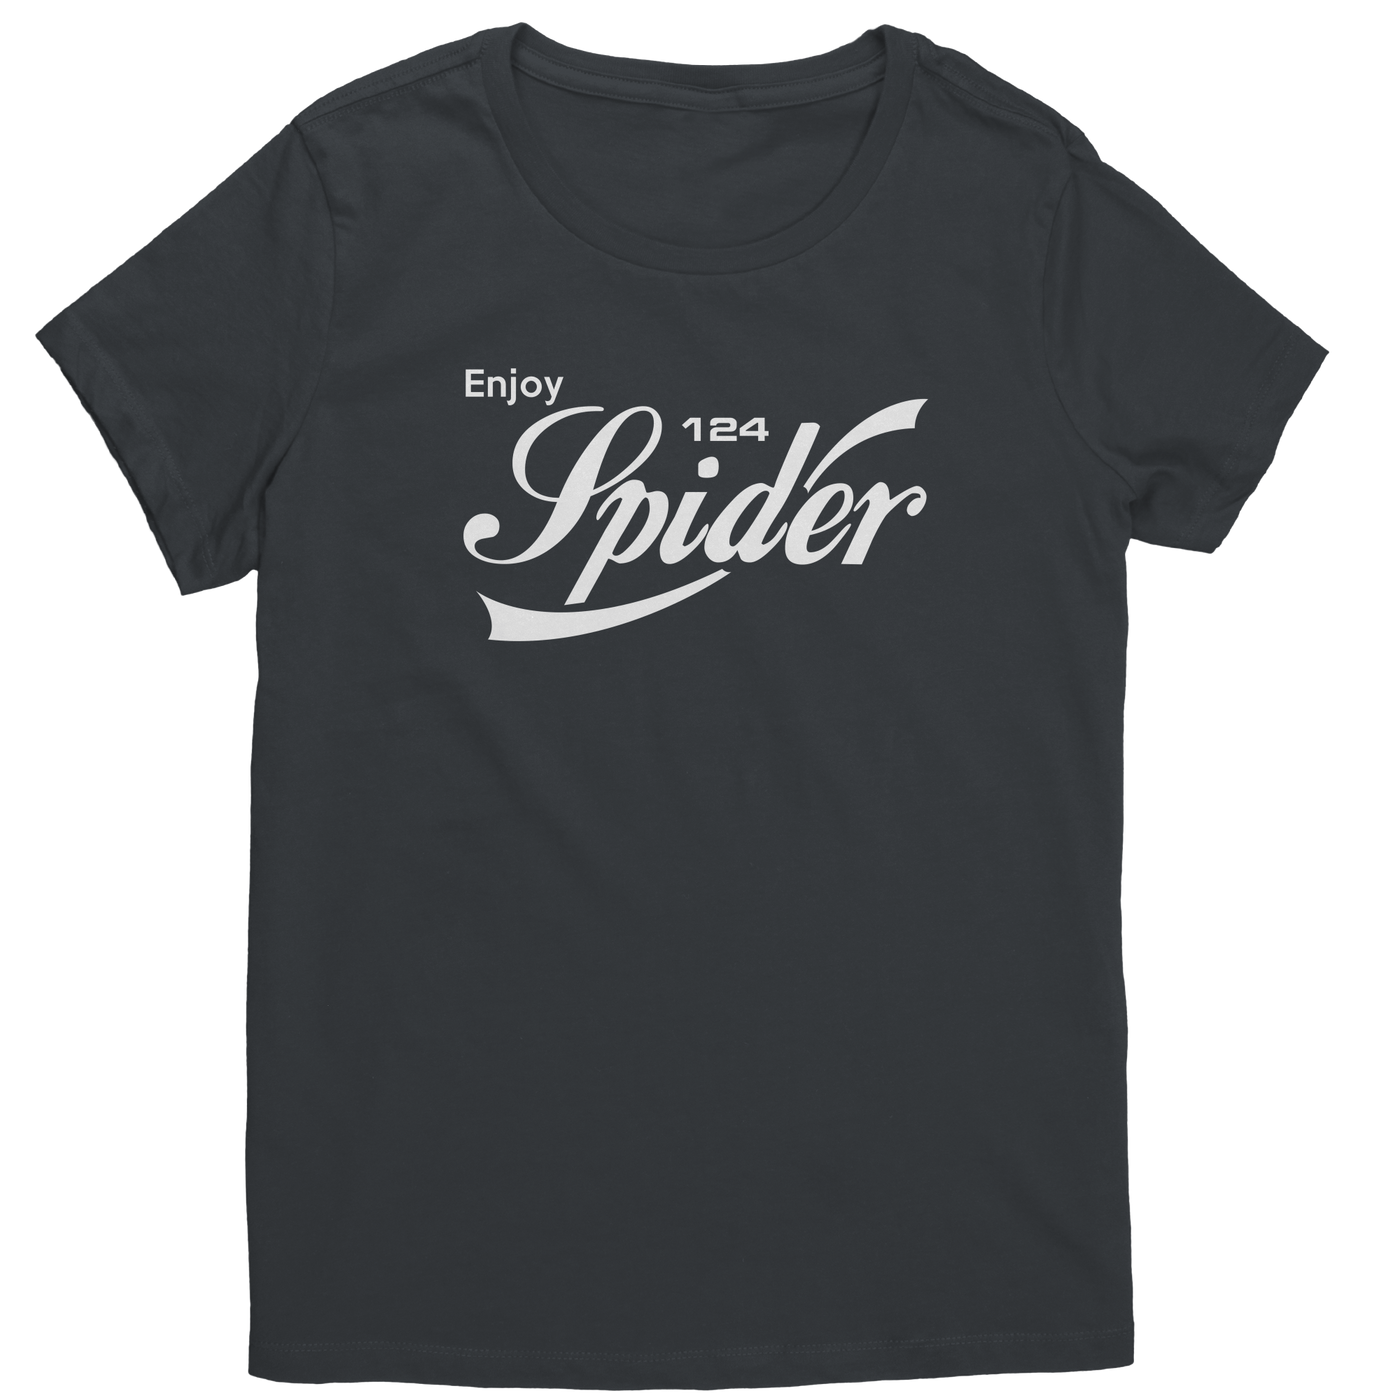 enjoy-124-spider-womens-shirt-charcoal